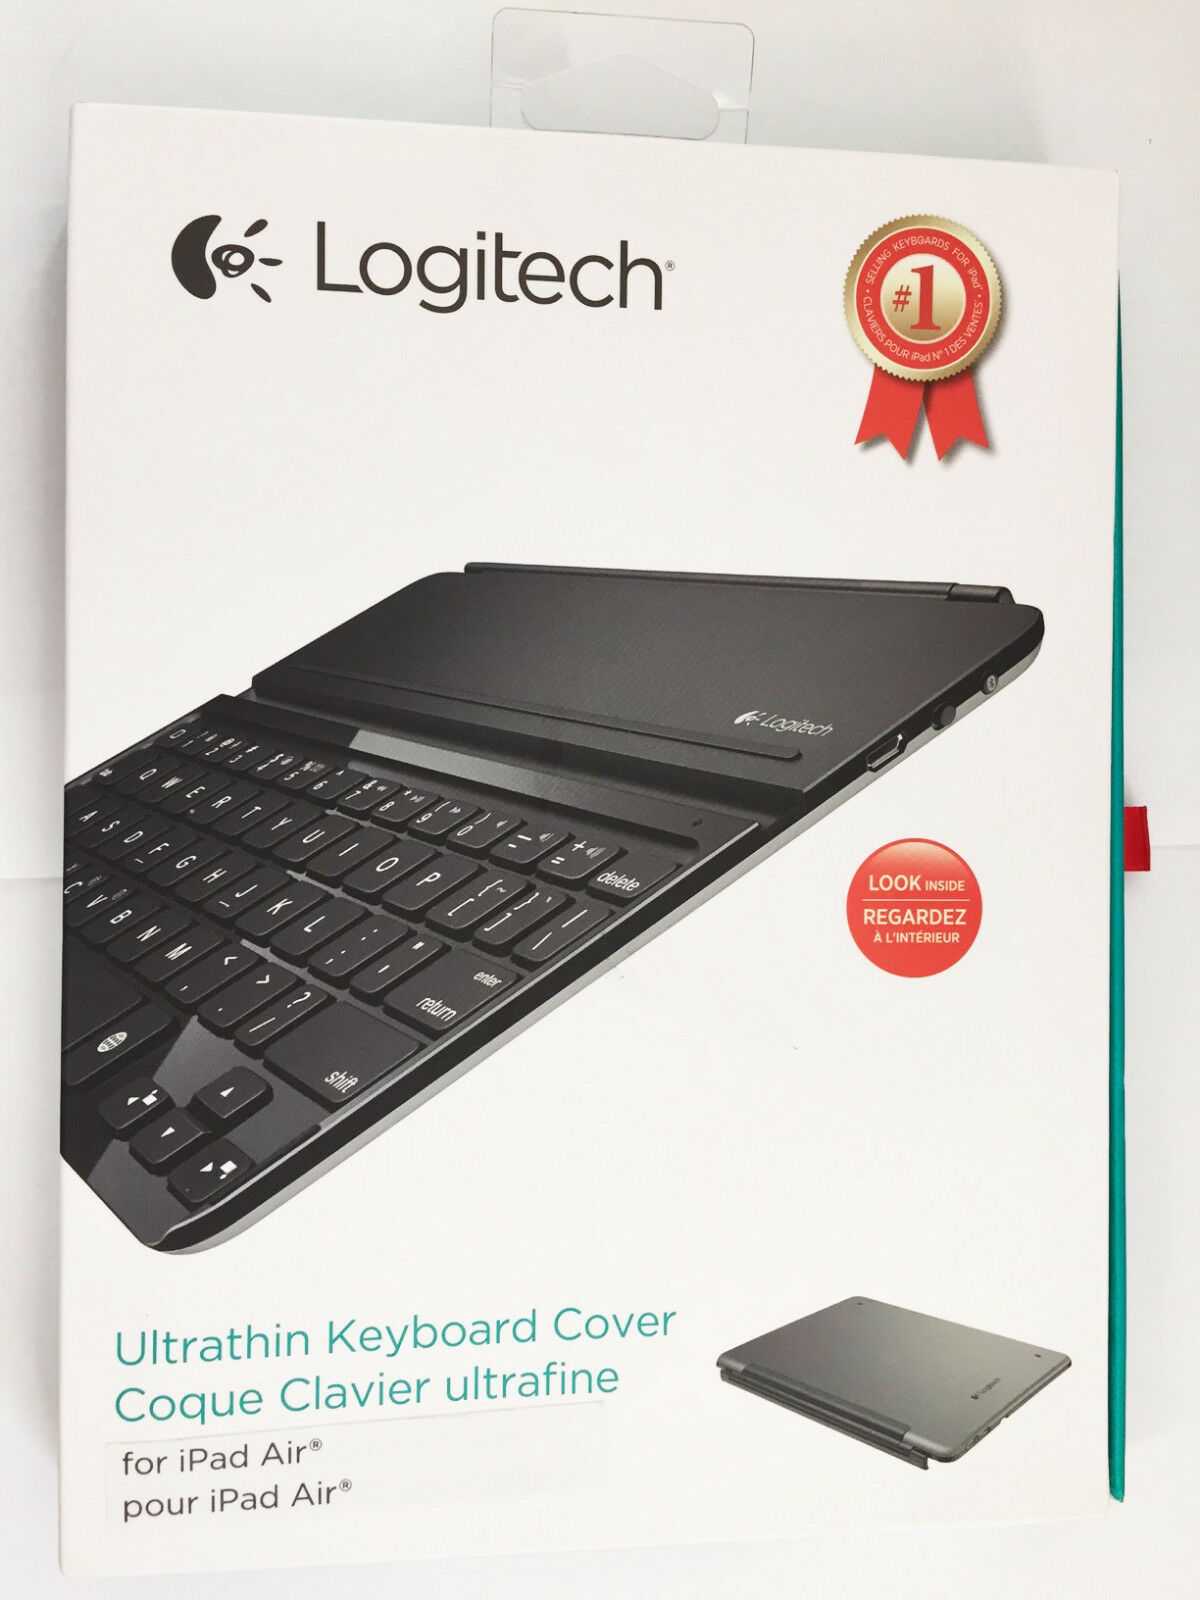 Logitech ultrathin keyboard cover white bluetooth 2.0 для ipad (белый) - купить , скидки, цена, отзывы, обзор, характеристики - клавиатуры